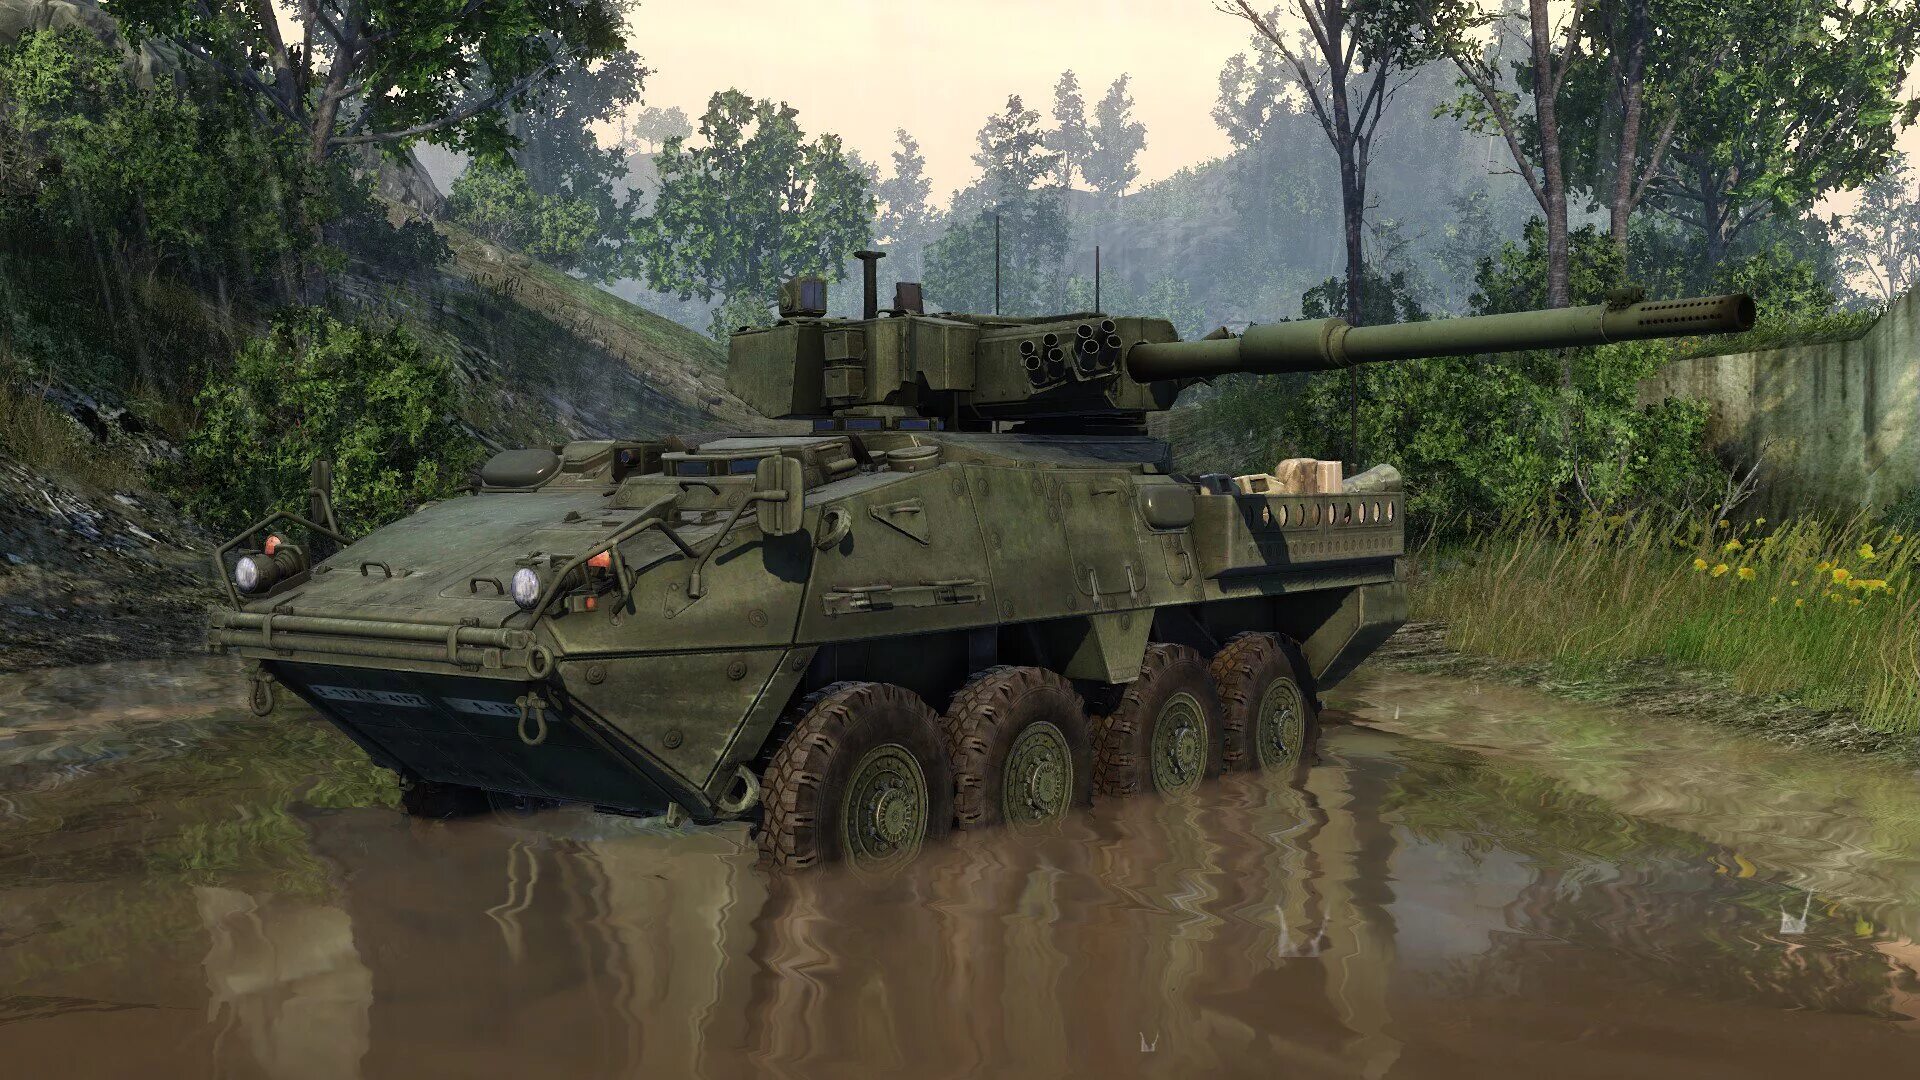 Armored Warfare: Армата. Centauro MGS 120. Танк b1 Centauro 120. Армата в вар Тандер. Проект армата официальная игра